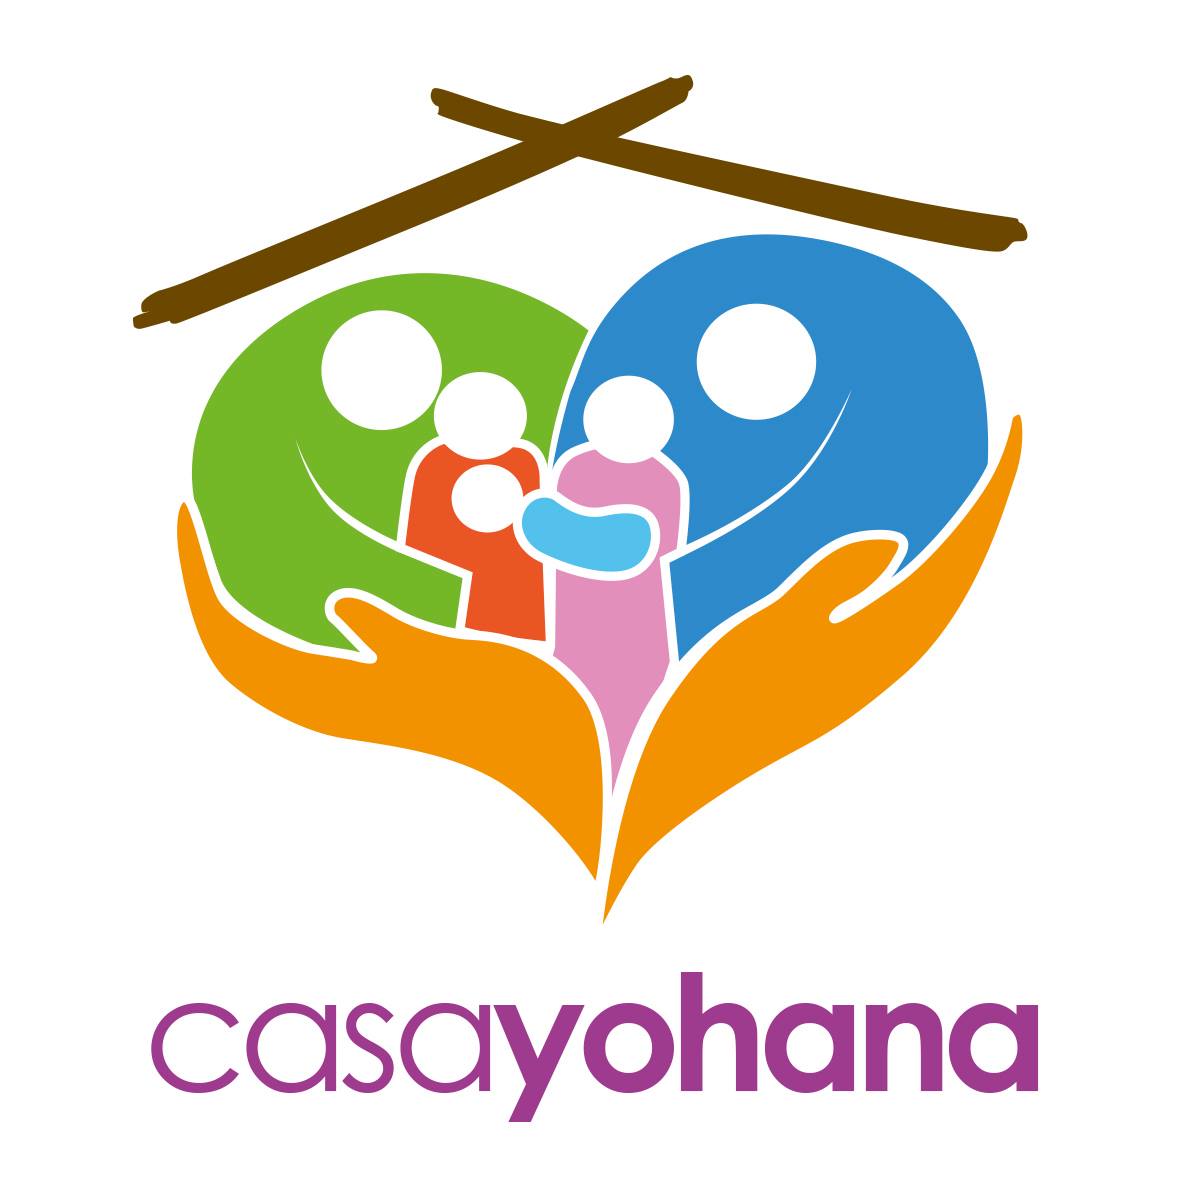 (c) Casayohana.org